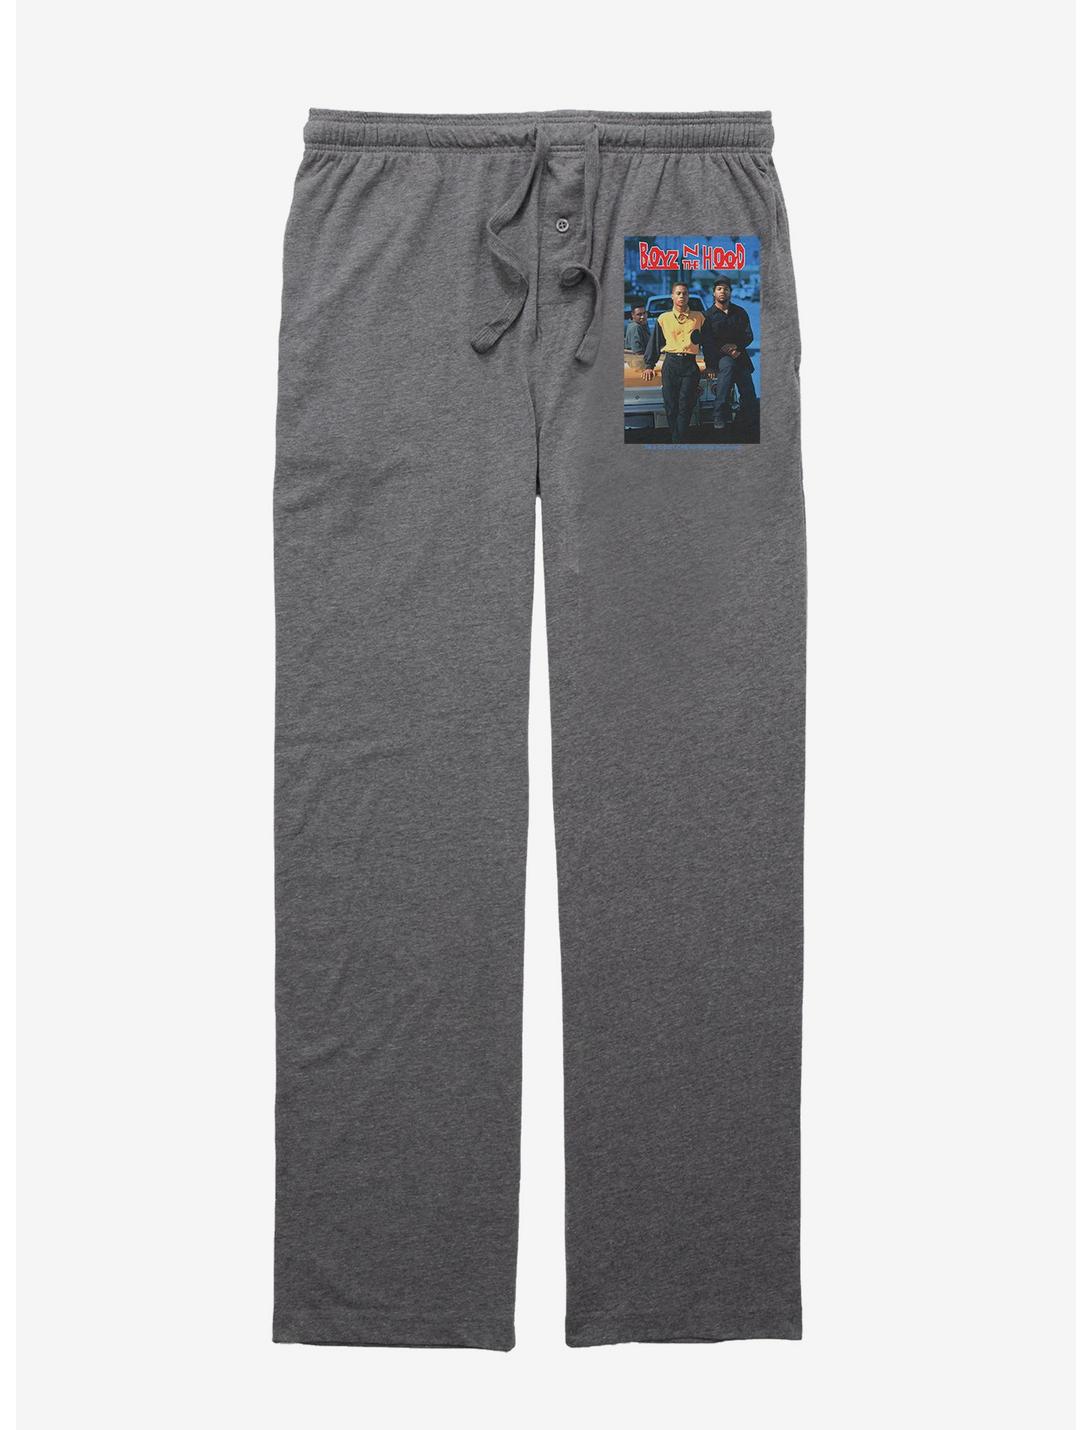 Boyz N The Hood Movie Poster Pajama Pants, GRAPHITE HEATHER, hi-res